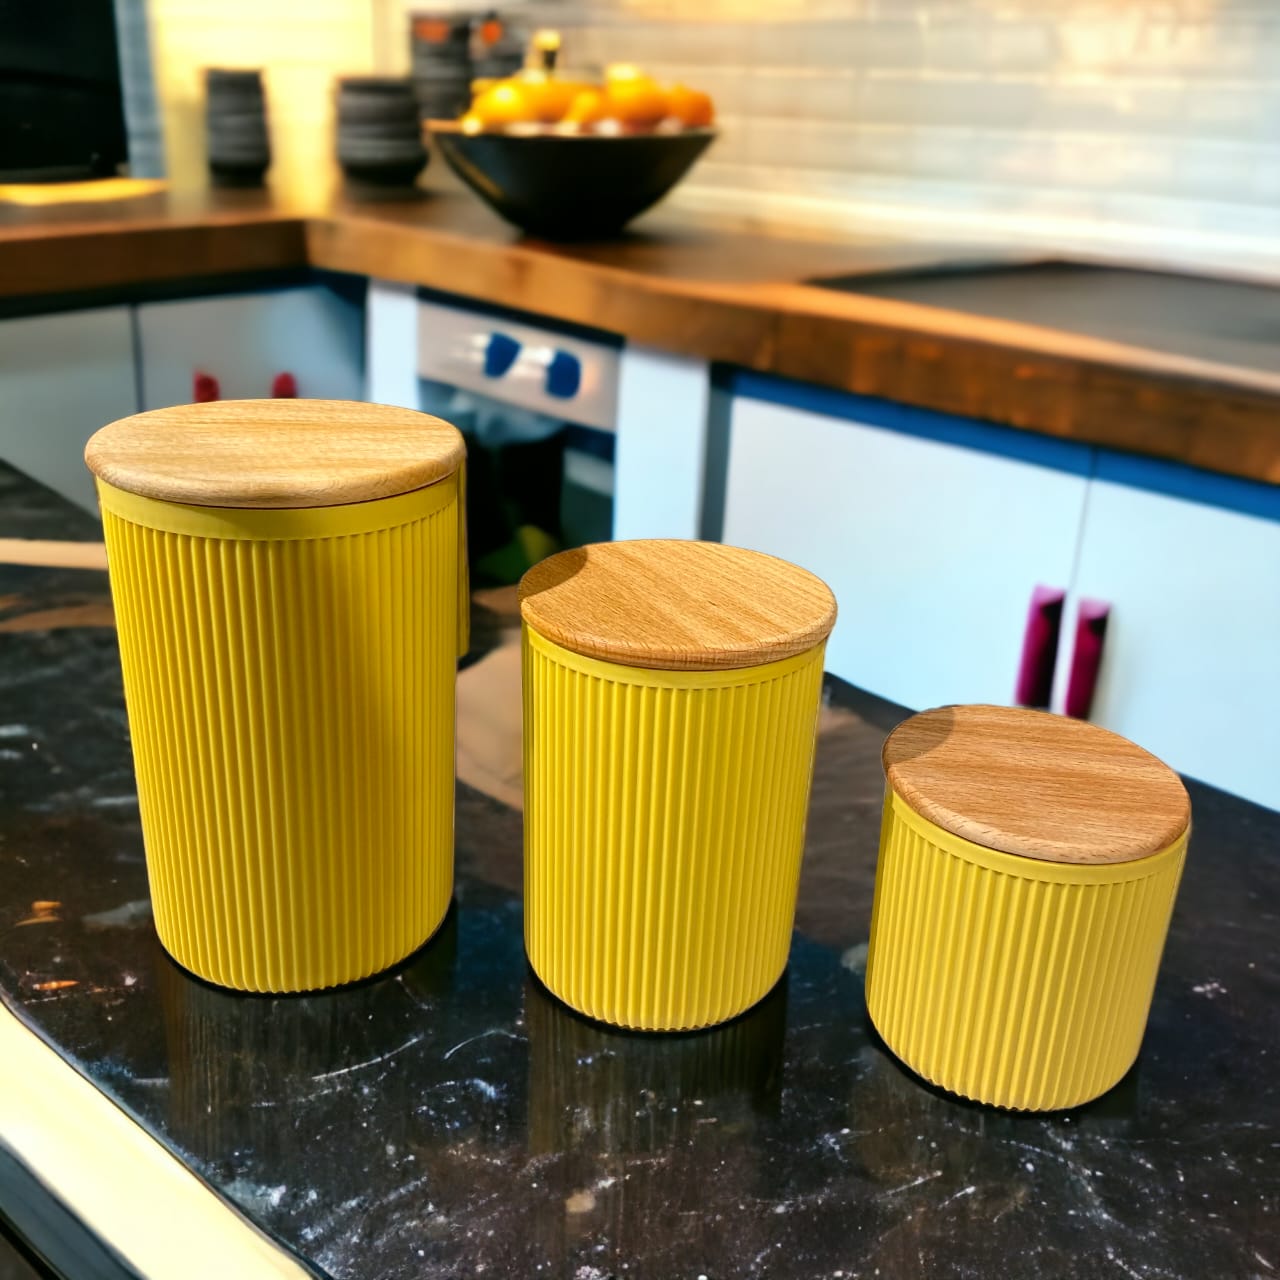 Airtight Jars With Wooden Lid 3 Pcs Set